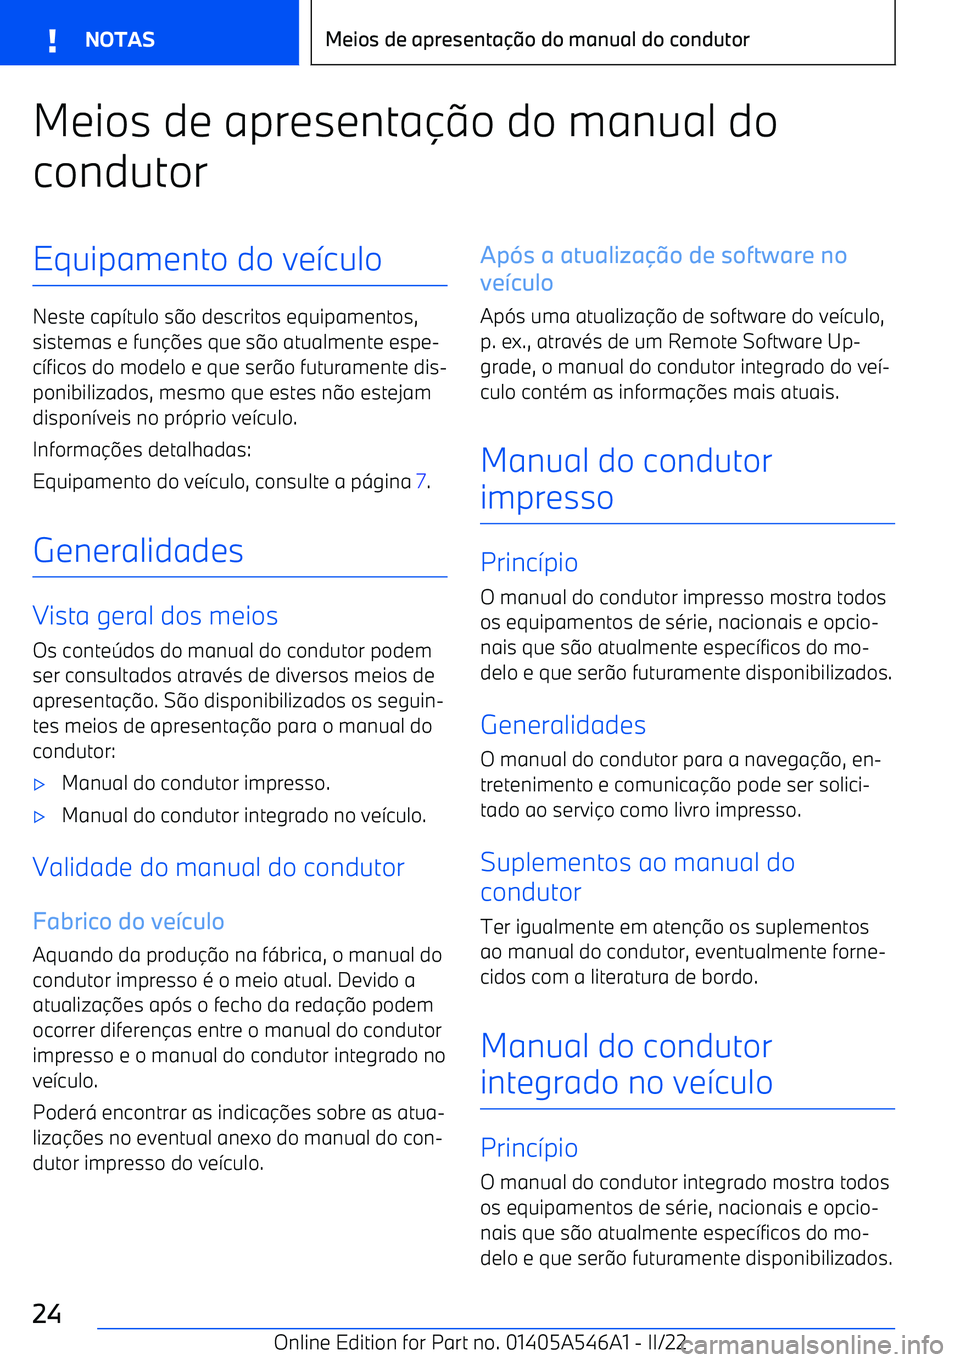 BMW I4 2022  Manual do condutor (in Portuguese) Meios de apresentao do manual do
condutorEquipamento do ve